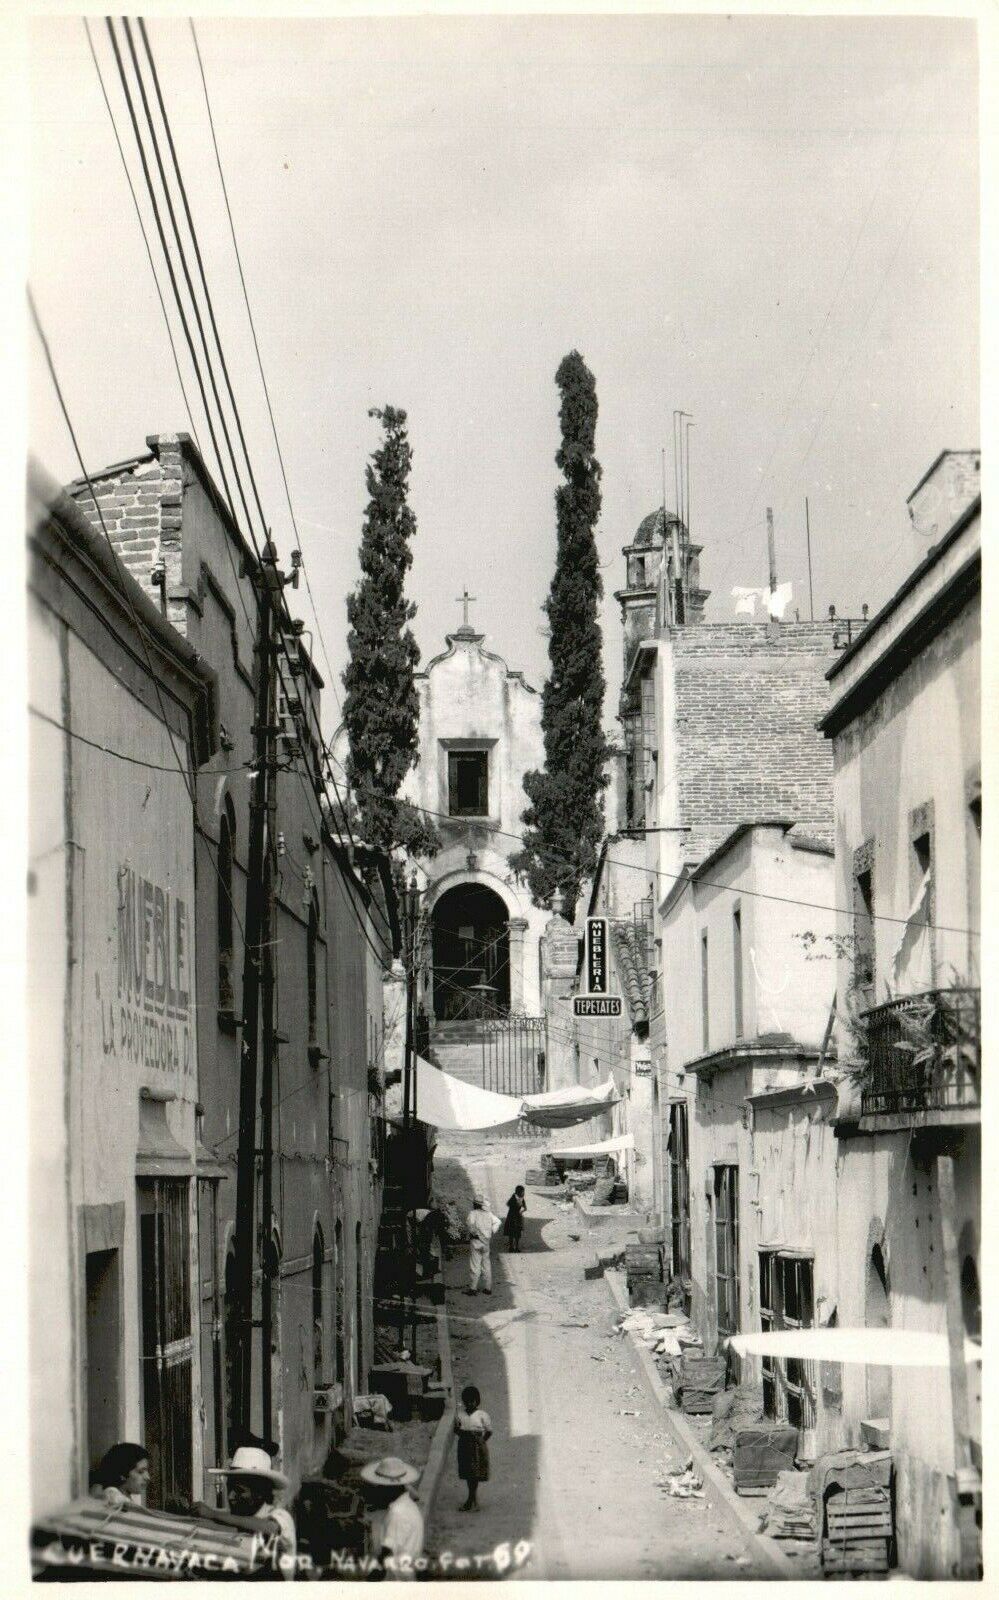 Vintage Postcard RPPC Cuernayaca Mor Navaro Photo Mexico Mexican Street View